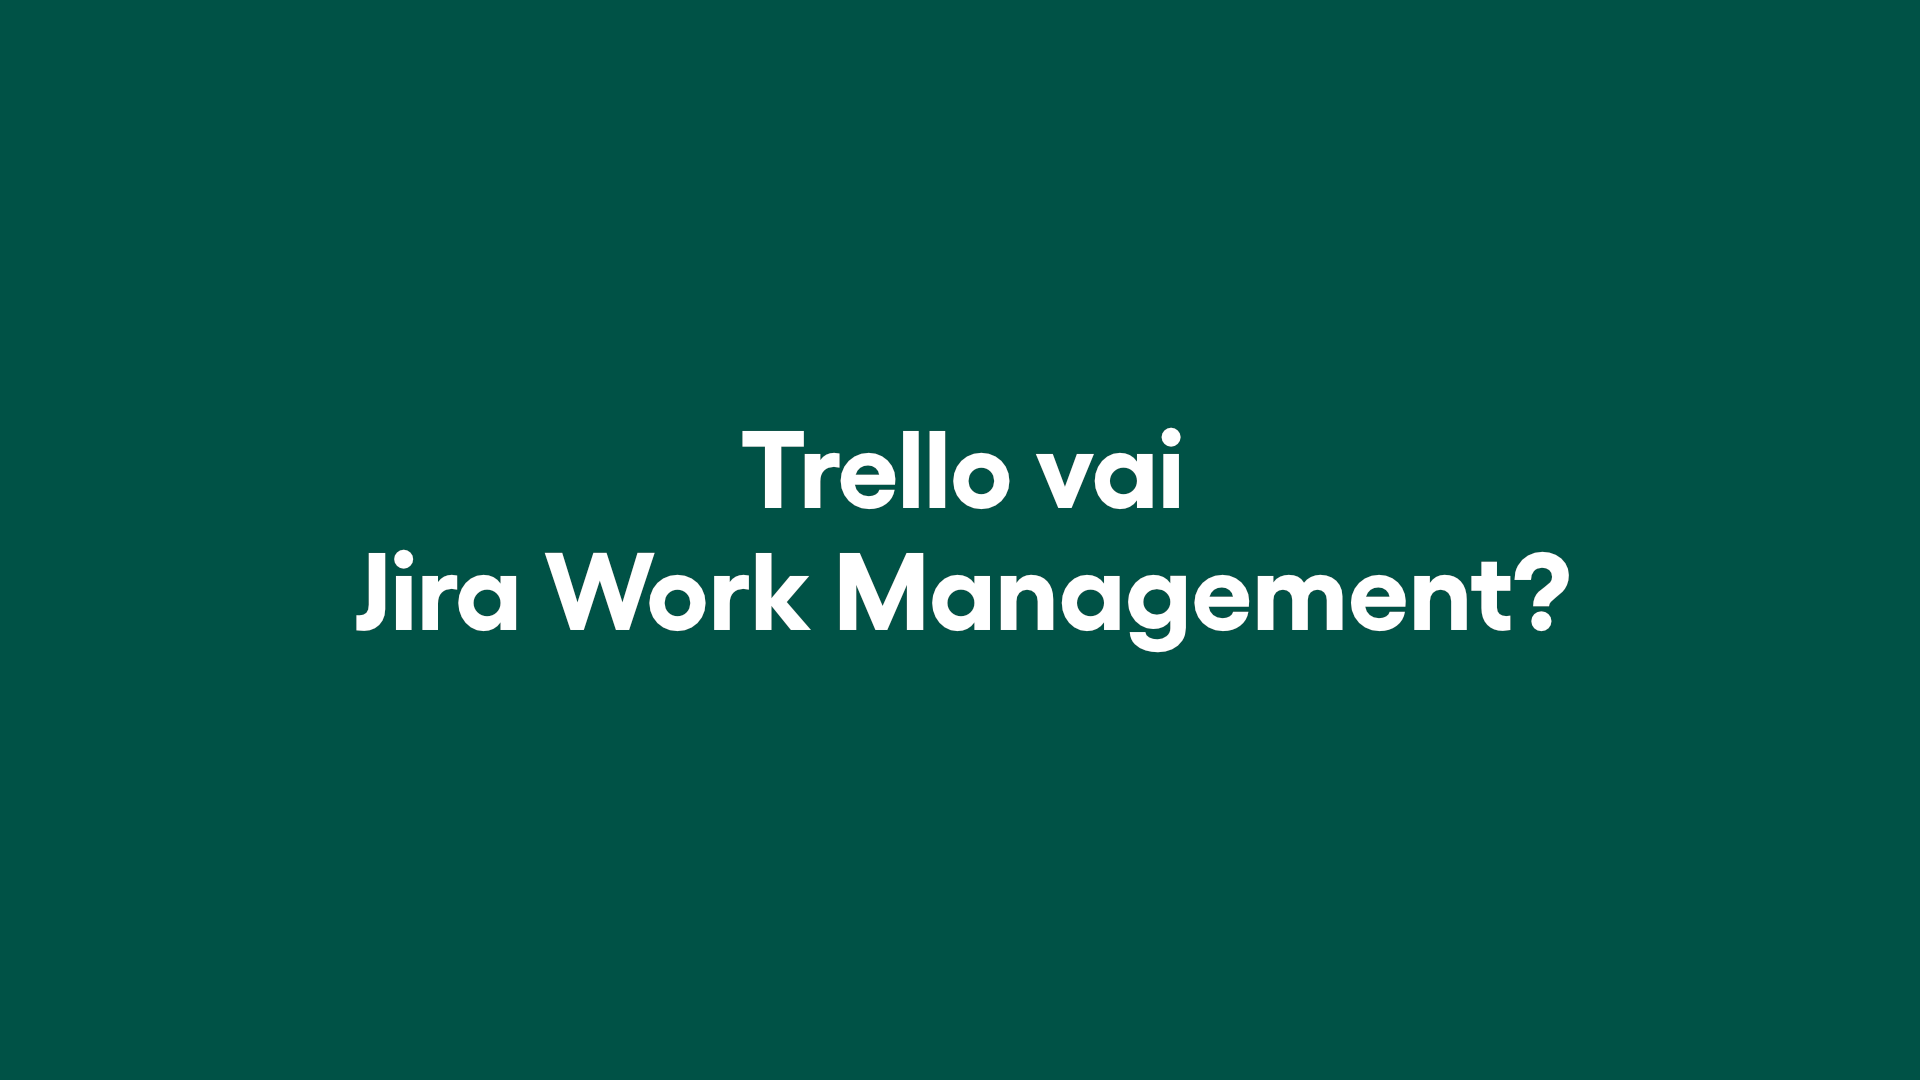 Jira Work Management on edullisempi ja monipuolisempi kuin Trello